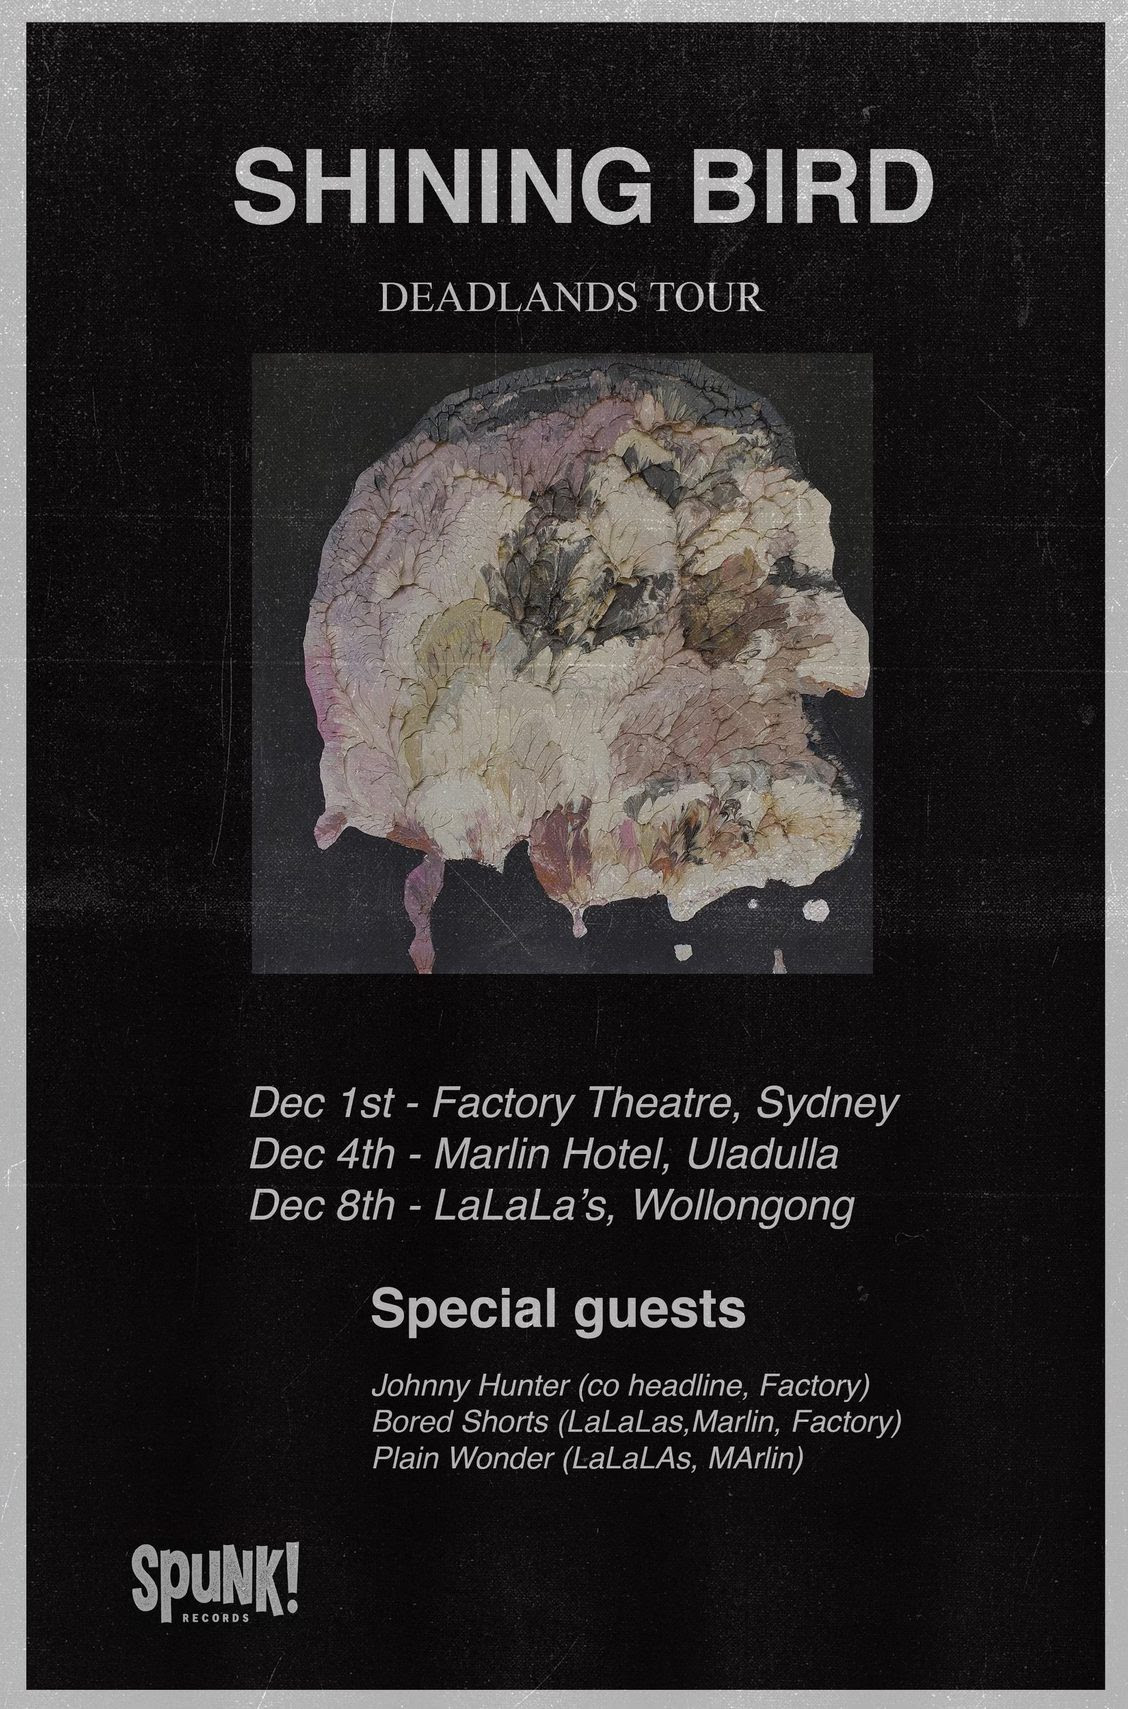 Shining Bird Deadlands album tour